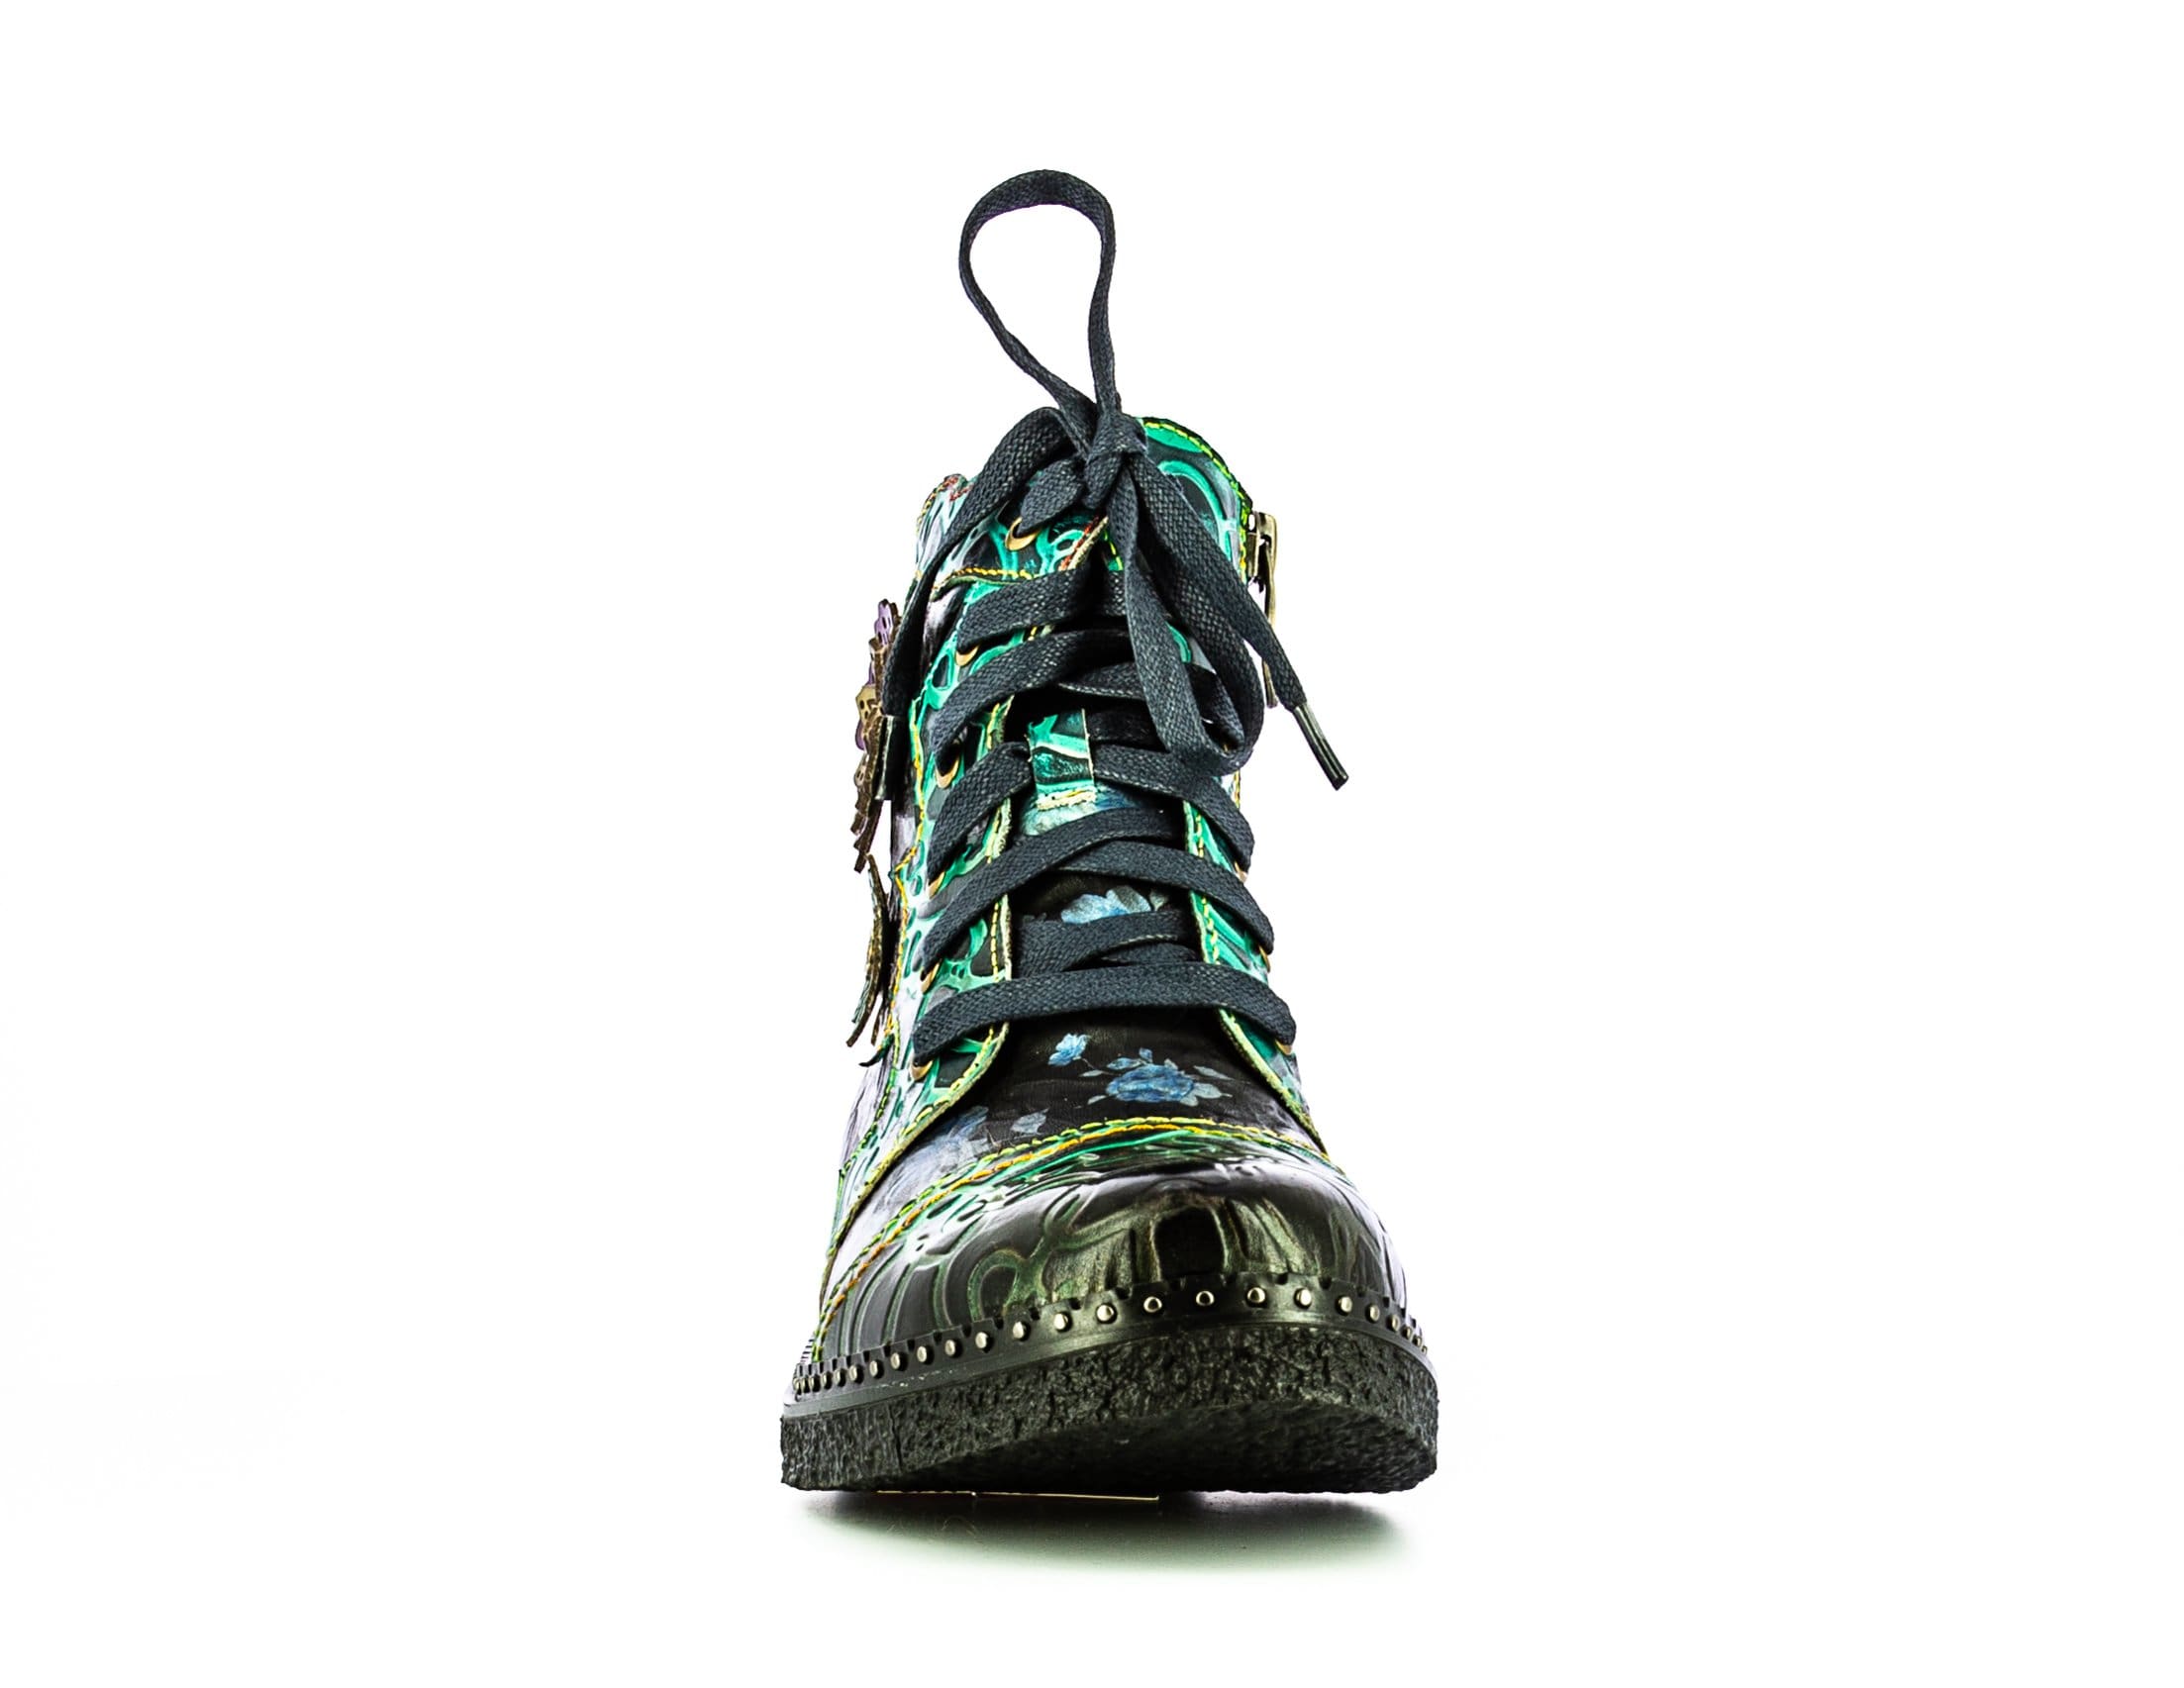 Shoe IDCITEO 041 - Boots